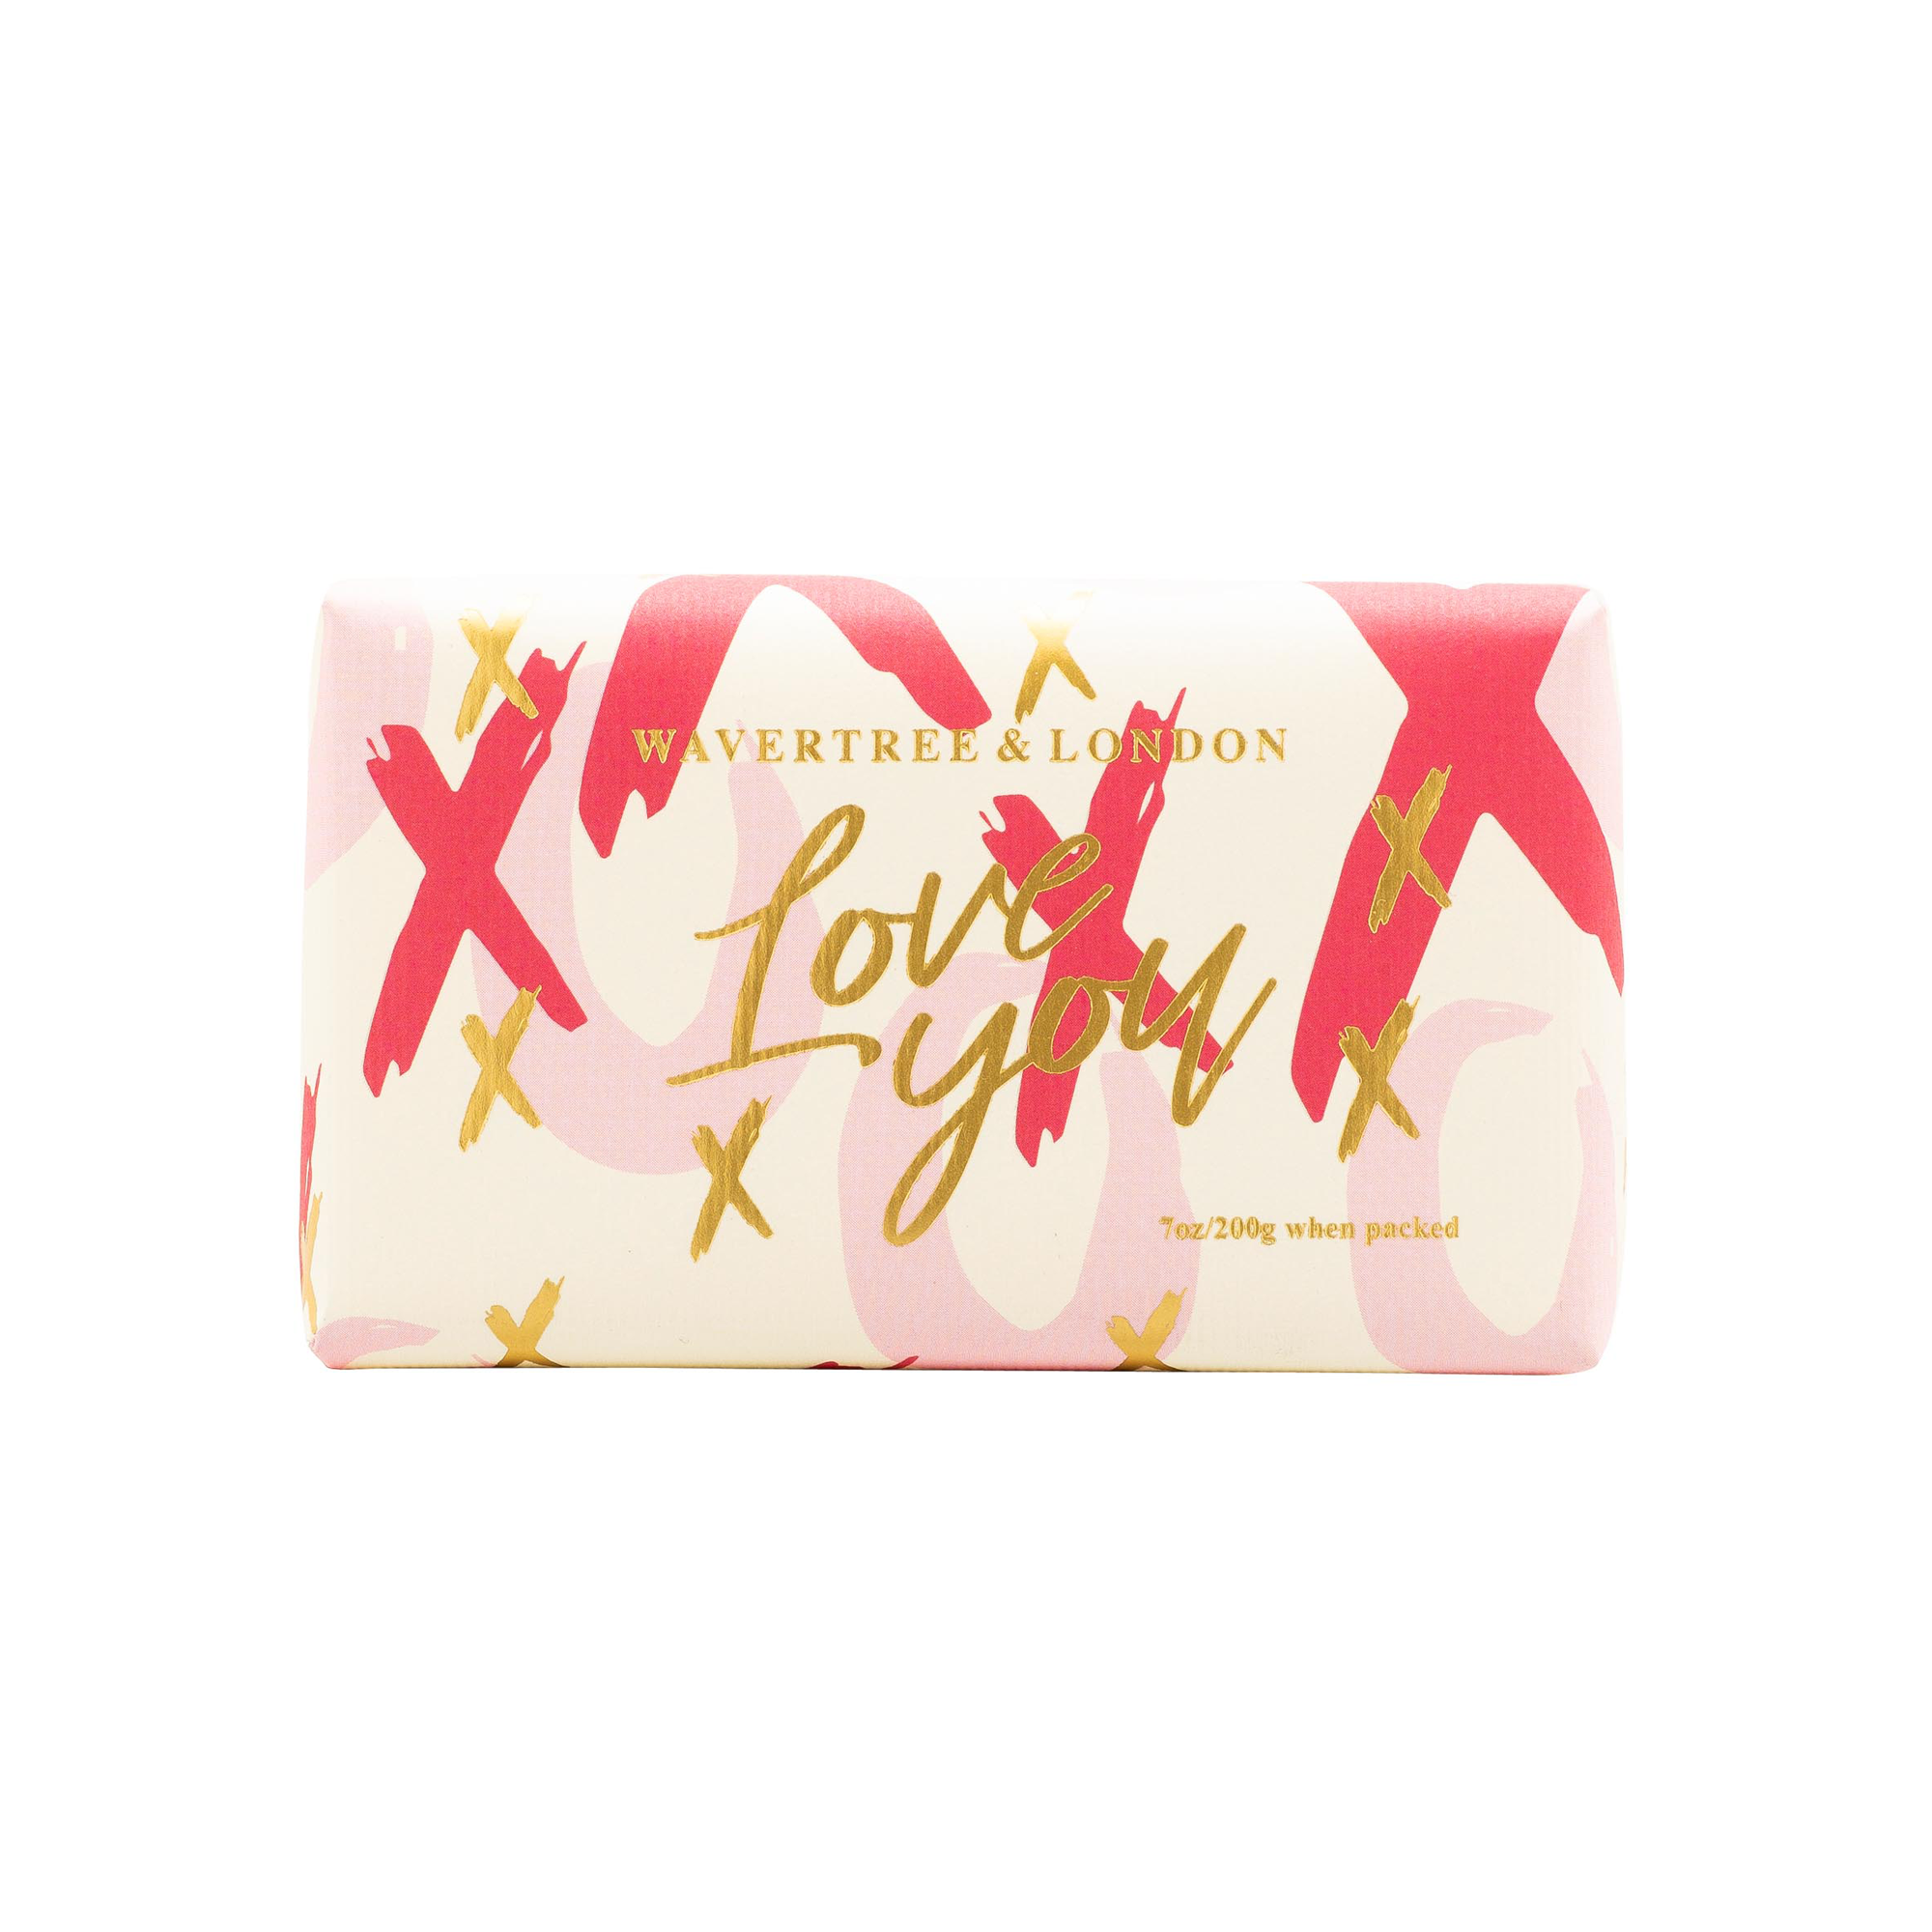 Love You XO- Sweet Pea Fragrance Soap bar 200g